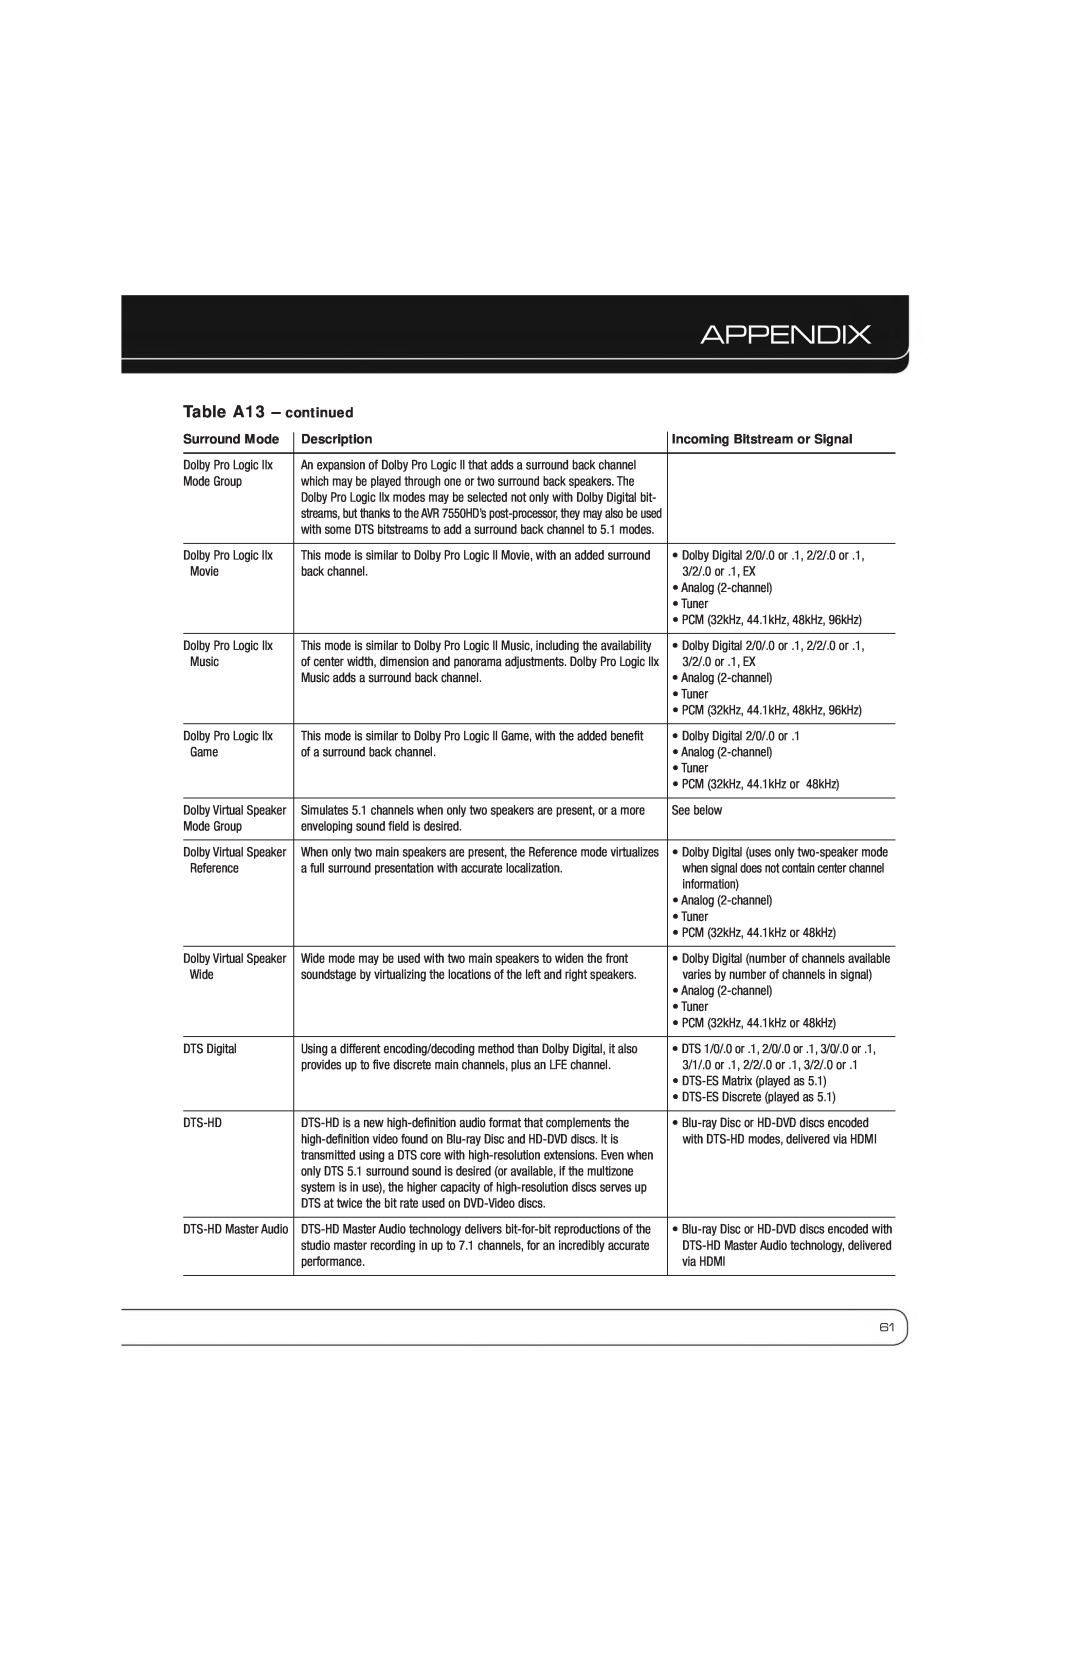 Harman-Kardon AVR 7550HD owner manual Table A13 - continued, Appendix 